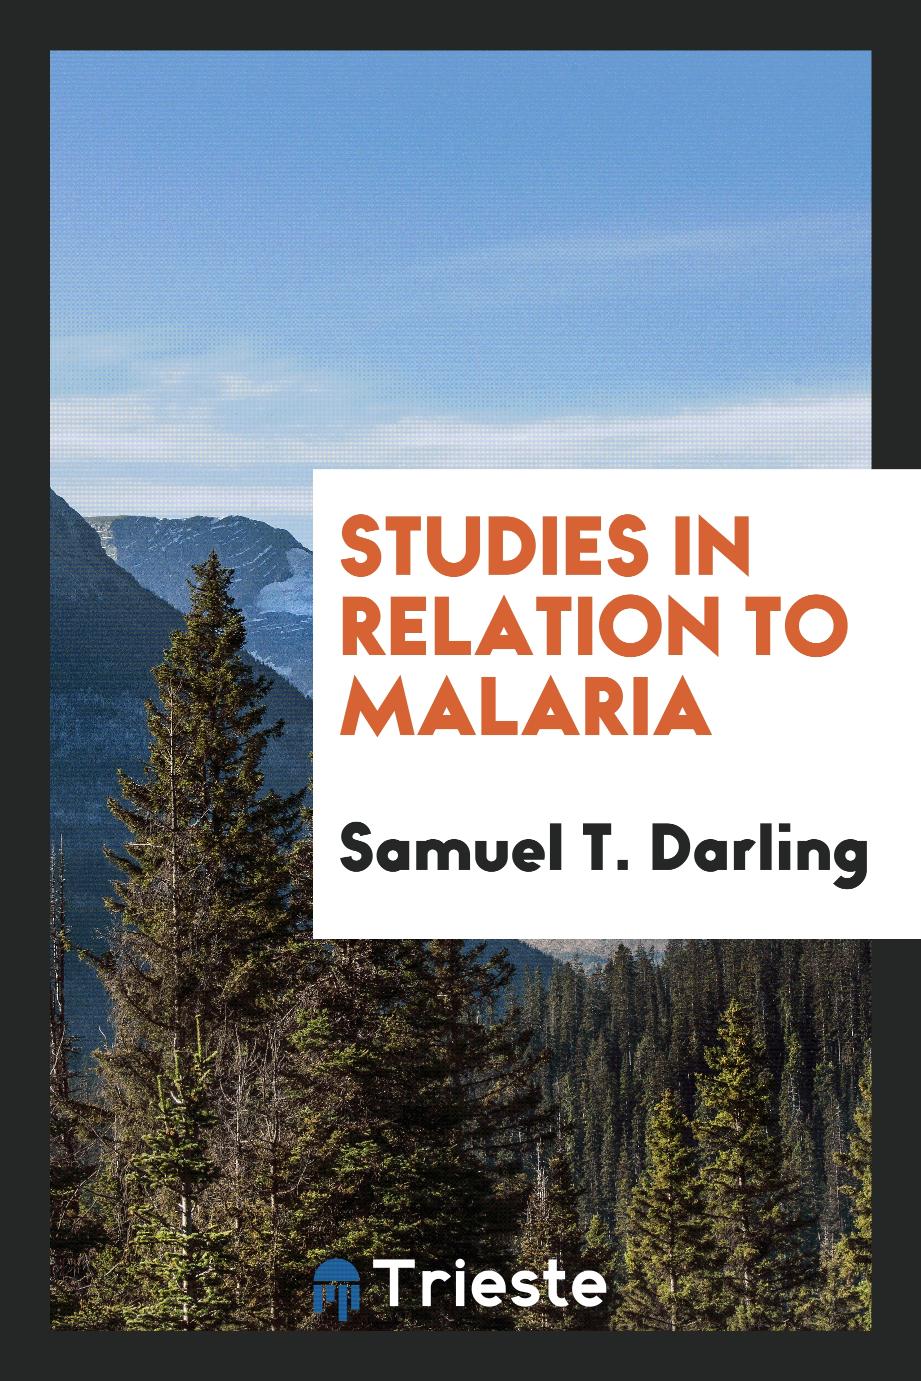 Studies in relation to malaria